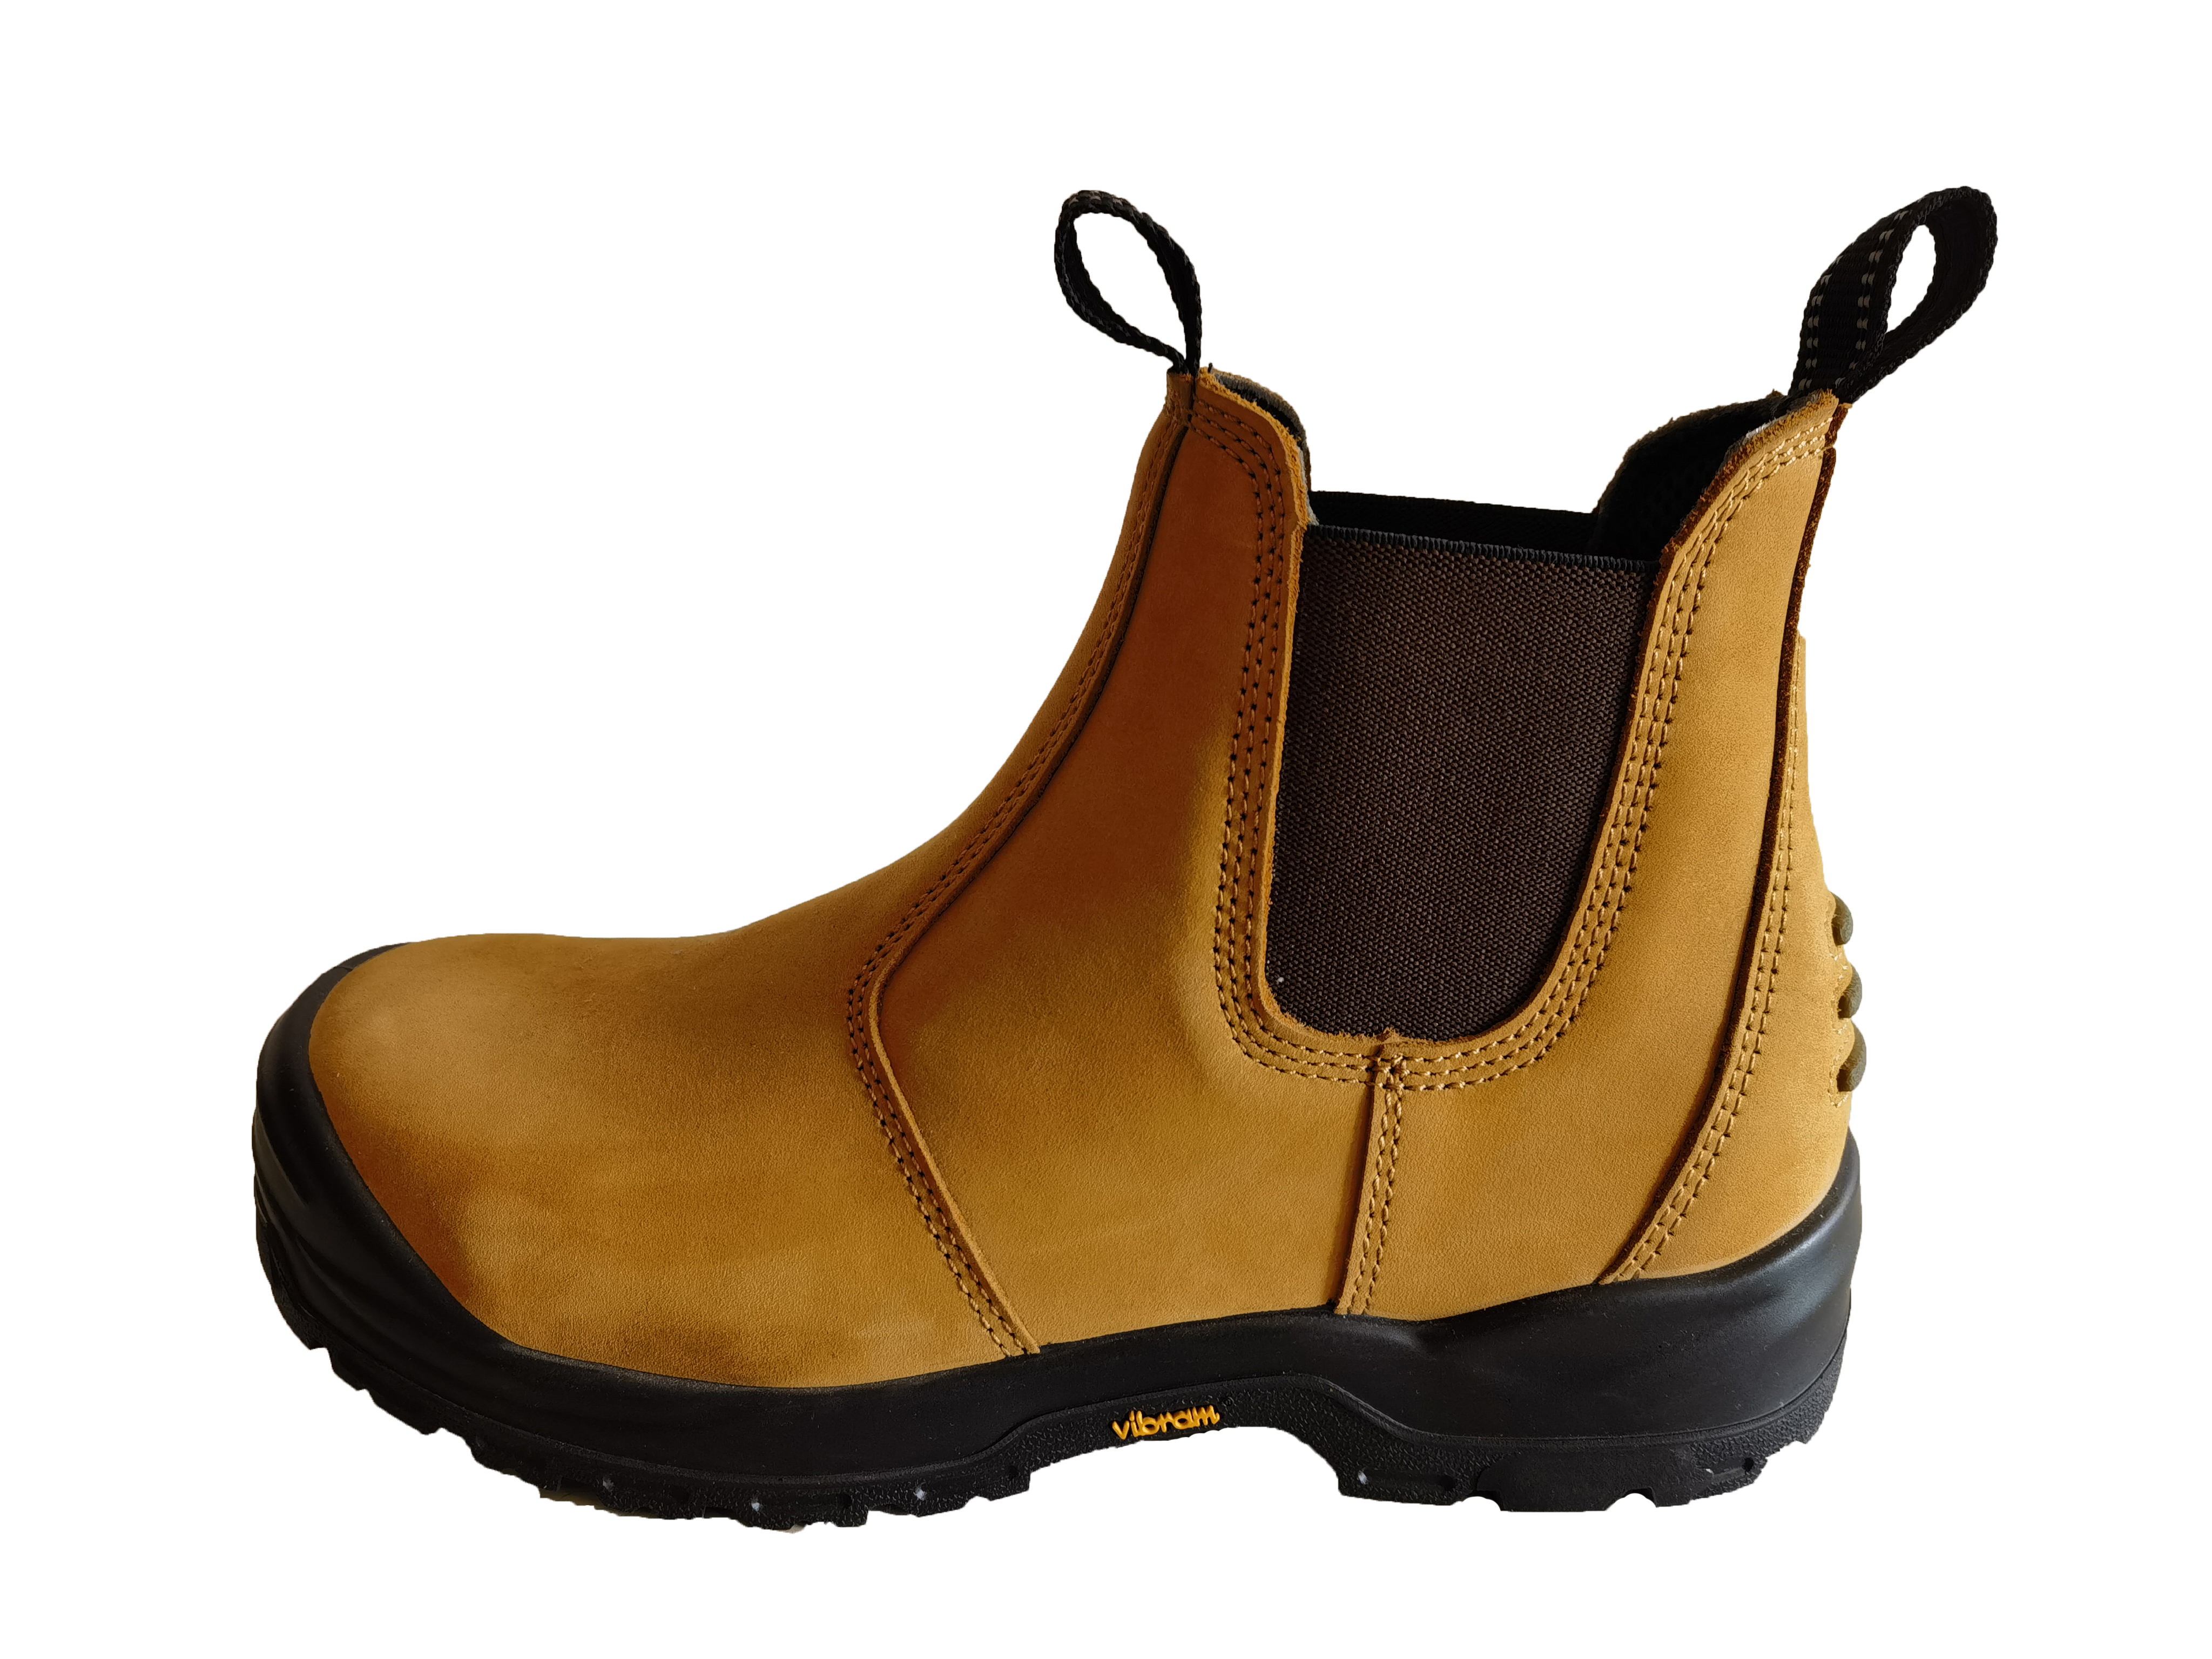 6IN. Wheat Composite Toe Waterproof Slip On Chelsea Work Boots vibram sole